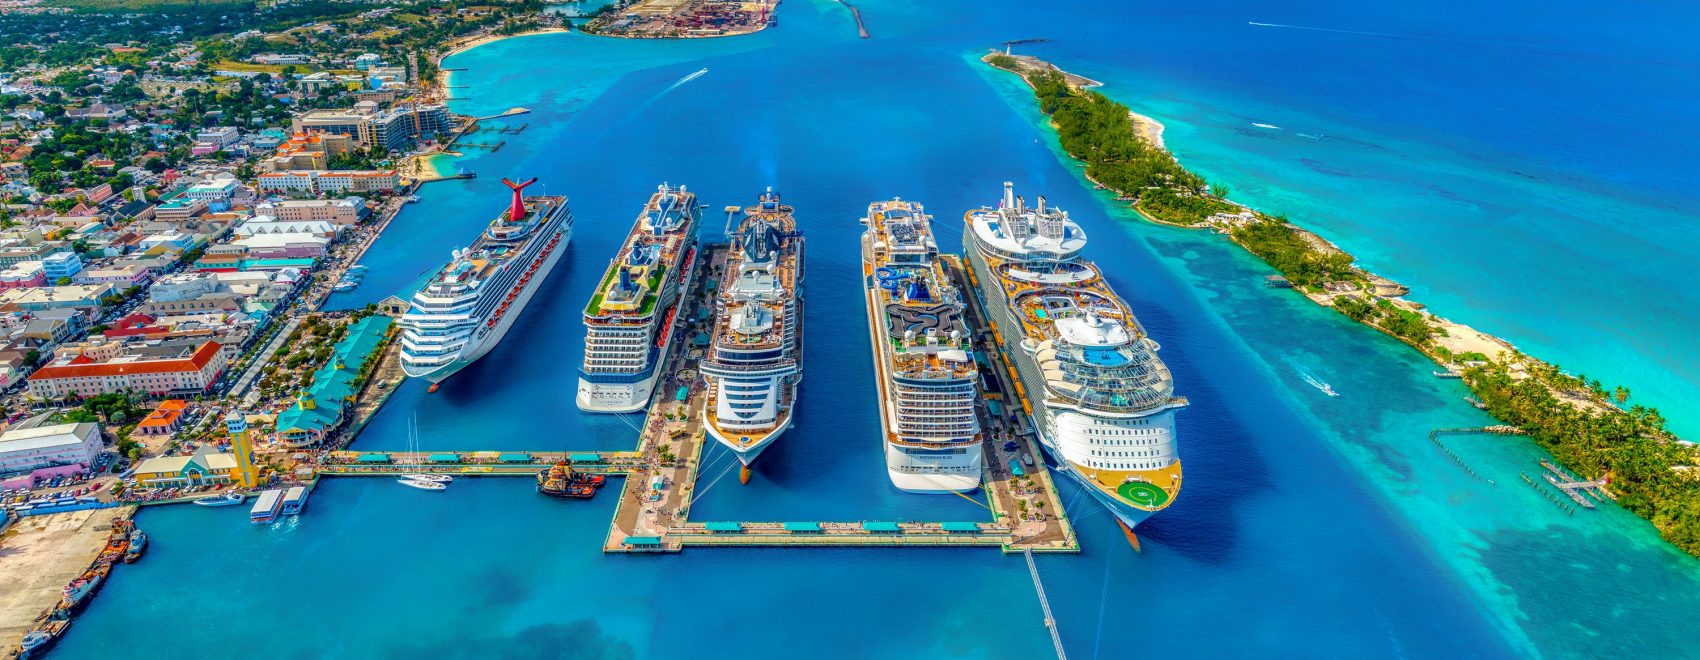 Nassau Bahamas port